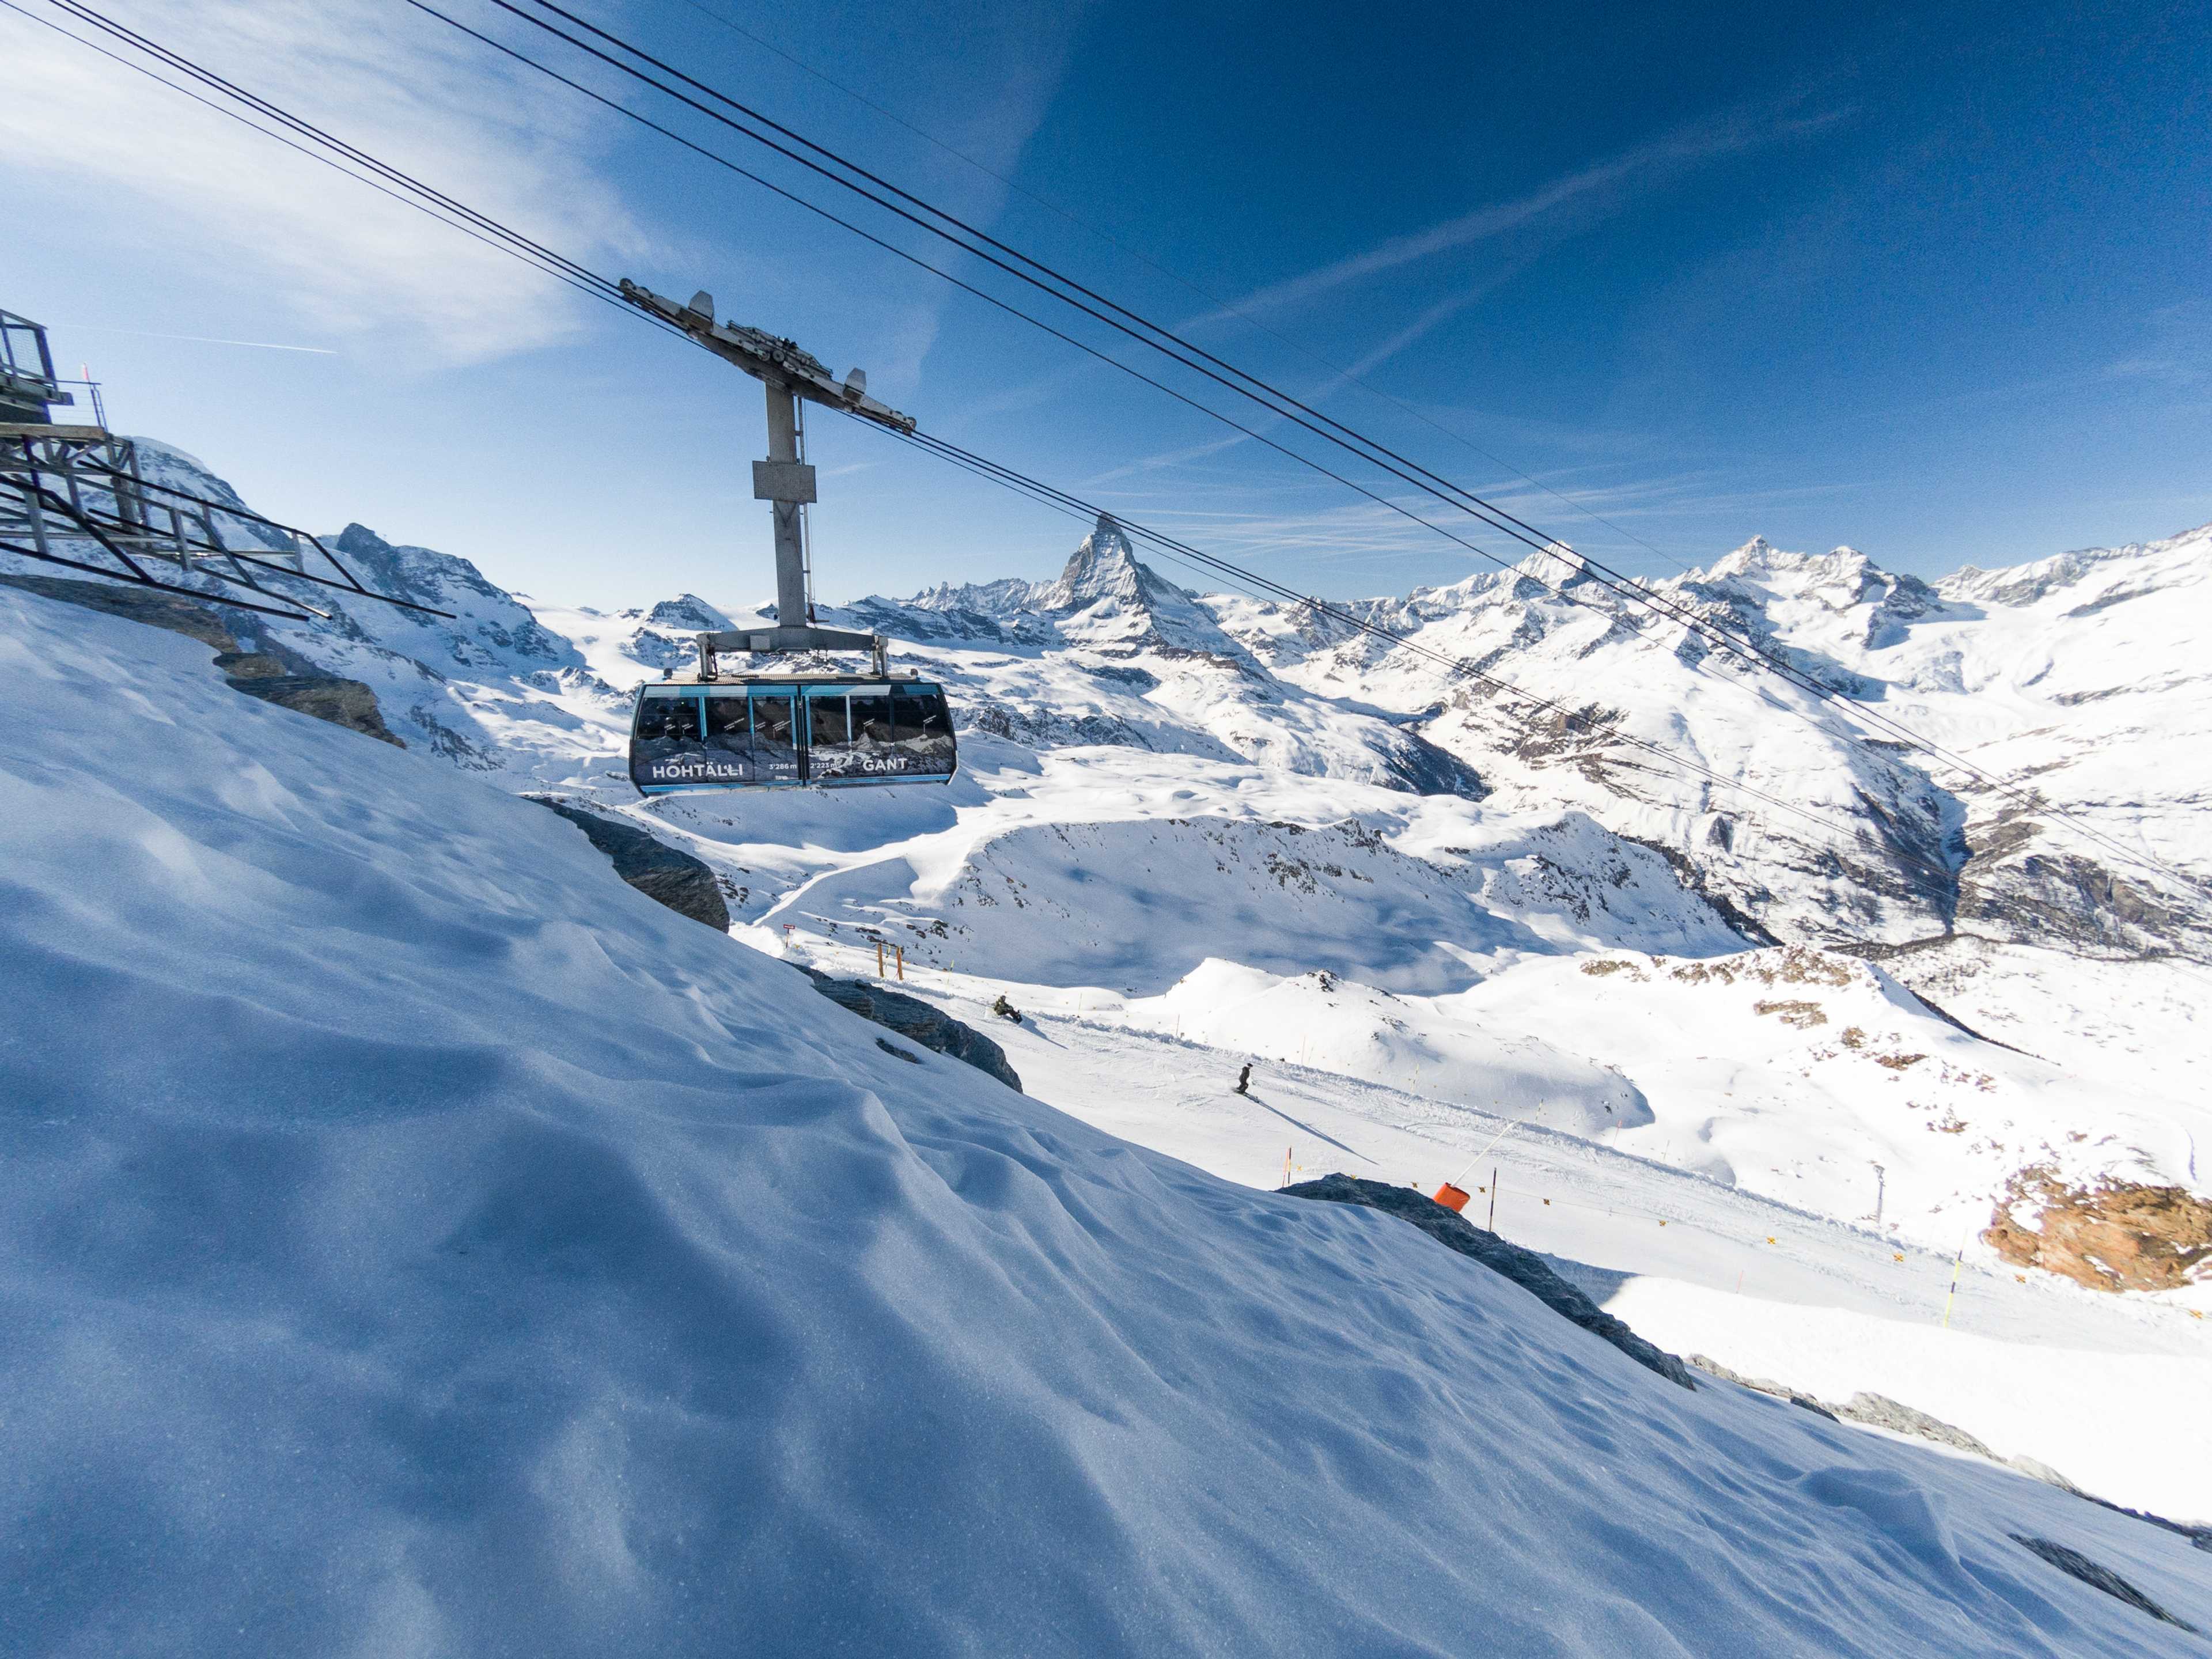 Gant-Hohtälli aerial tramway, Zermatt